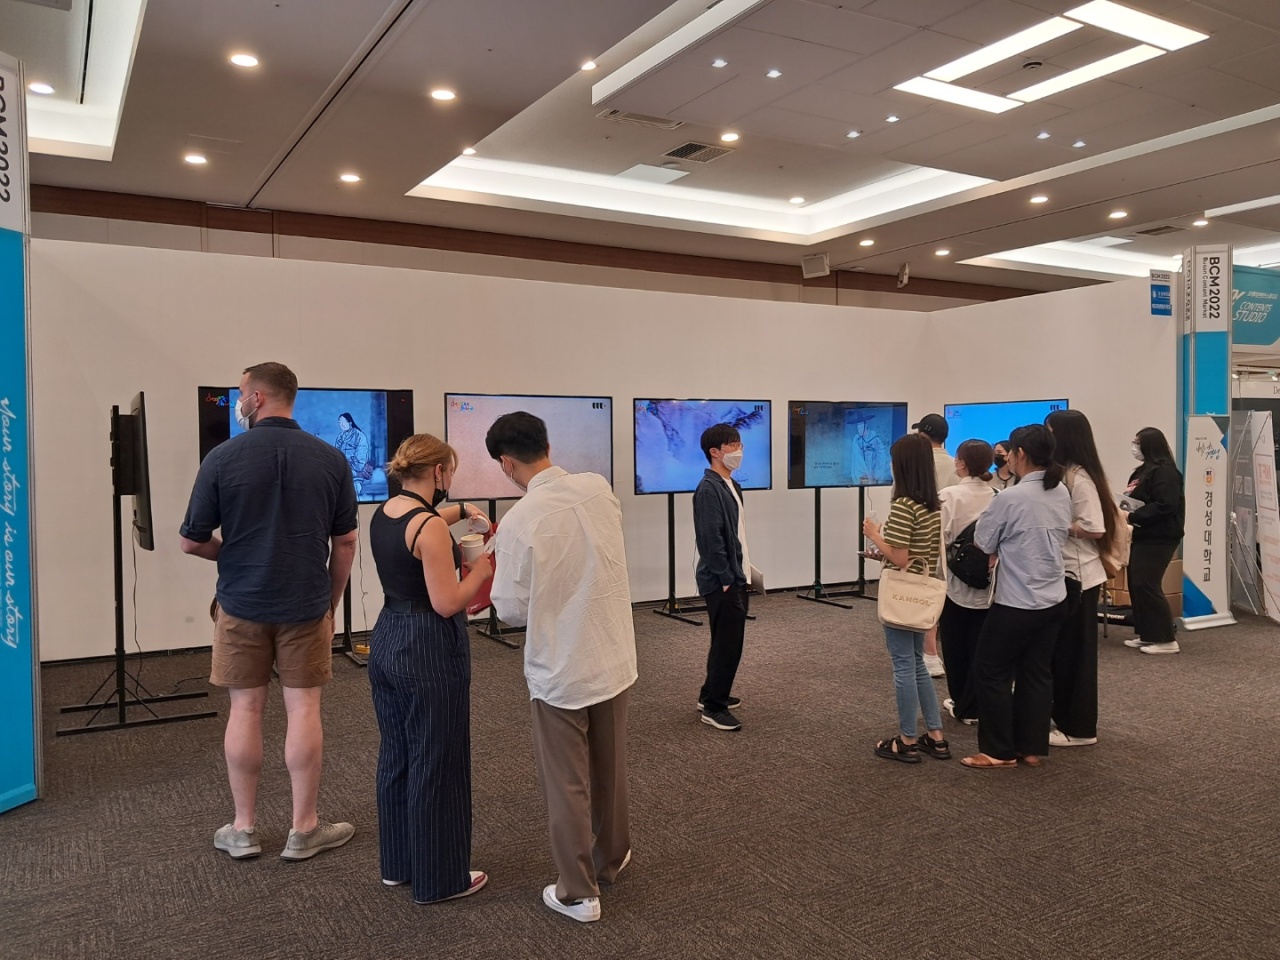 Visitors enjoy media art presented at the “Art Content & Board Game IP Market” exhibition at Busan Content Market. (Lee Si-jin/The Korea Herald)